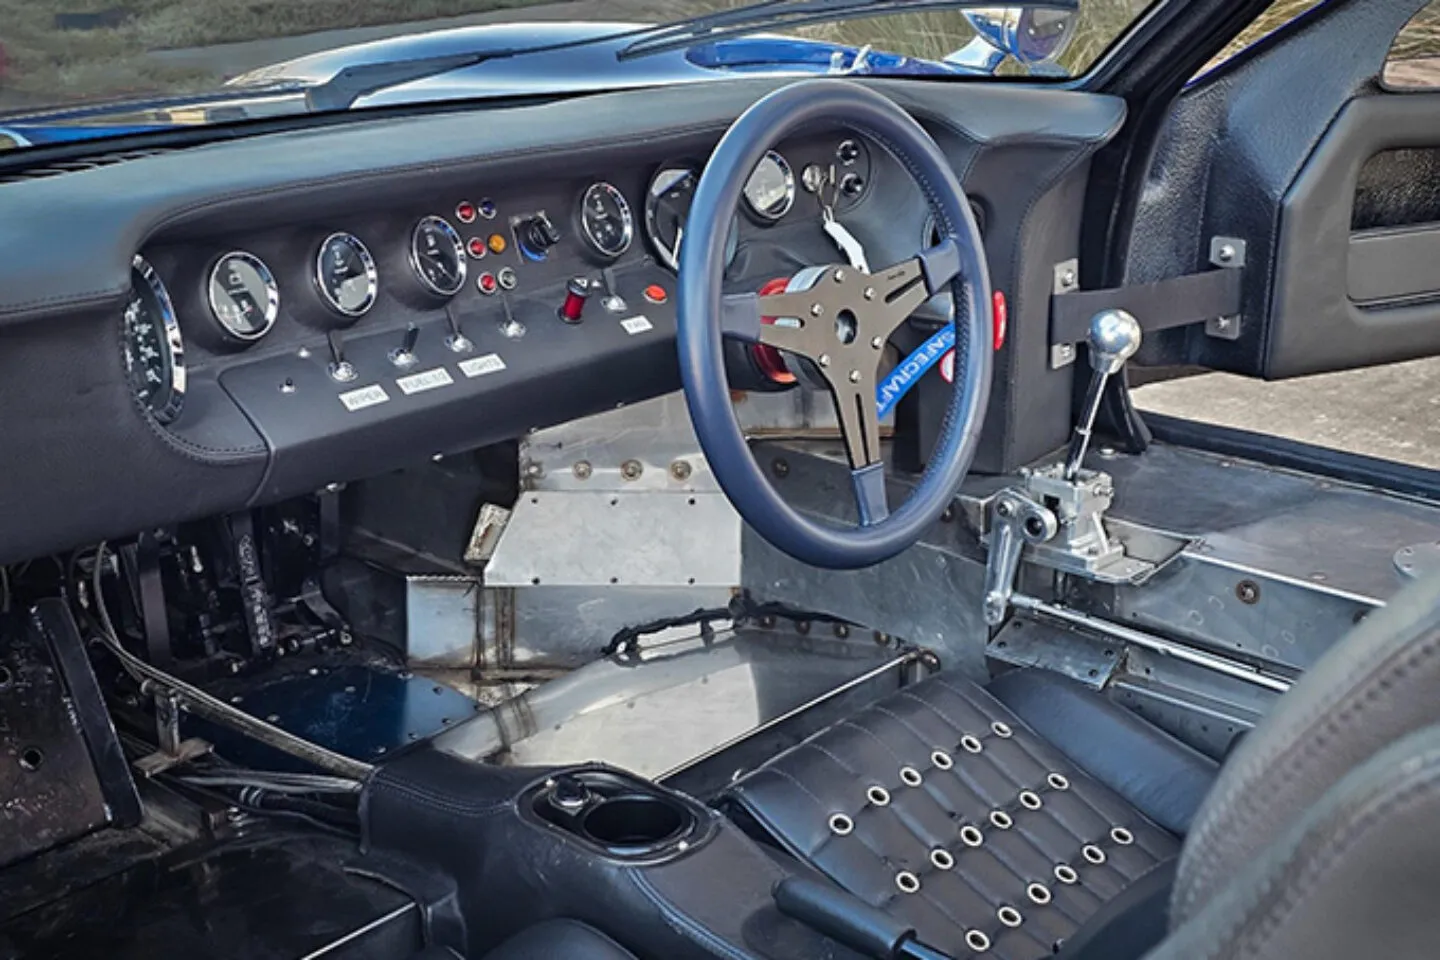 1967 ford ford gt ford vs ferrari movie car 2 1440x960 1